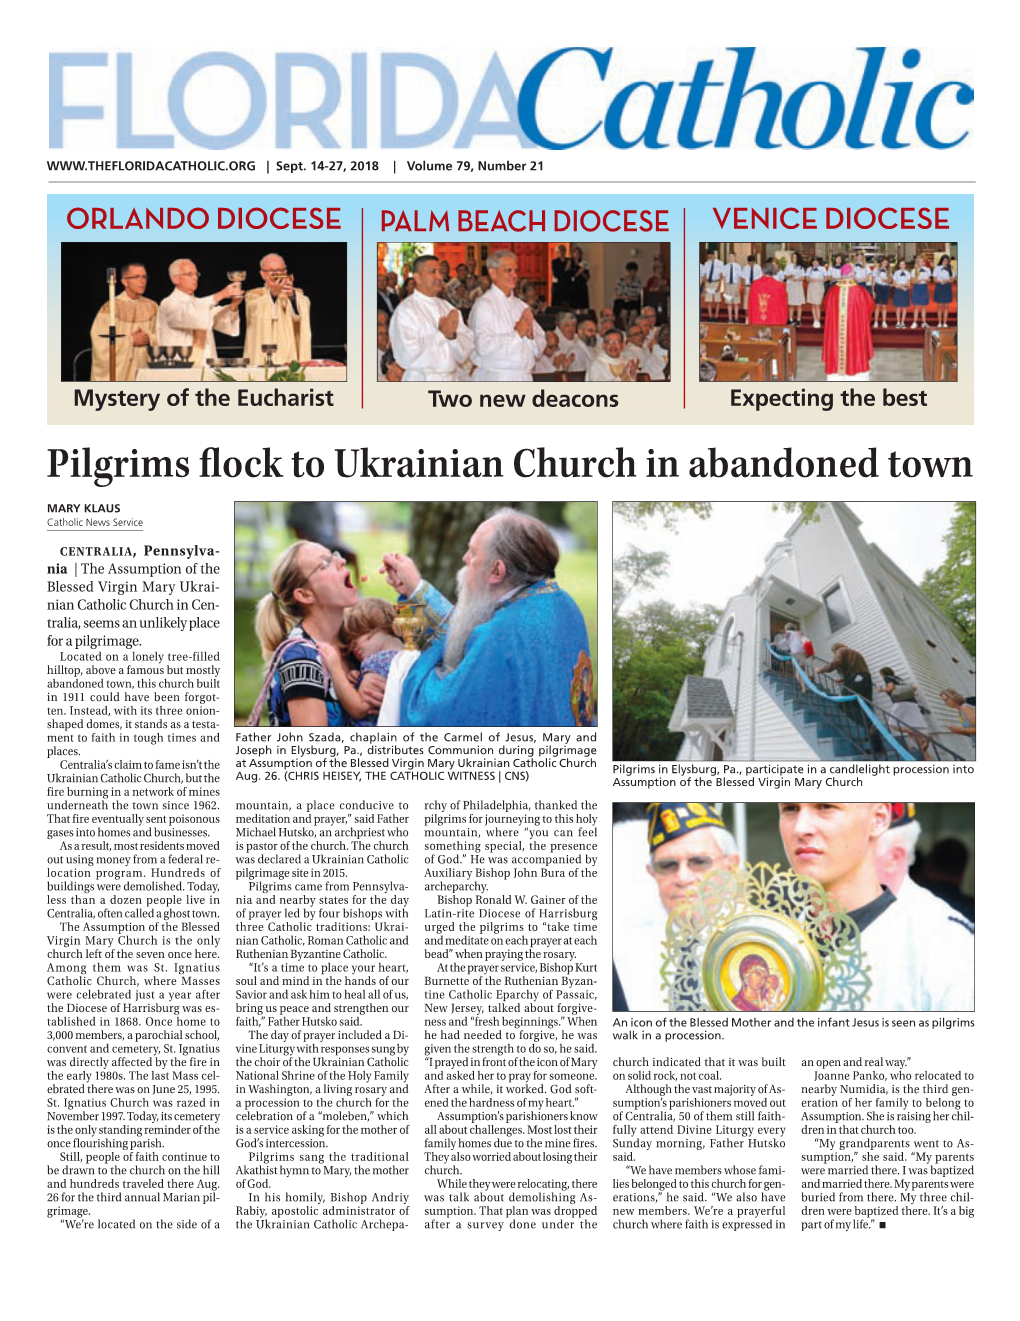 Pilgrims Flock to Ukrainian Church in Abandoned Town